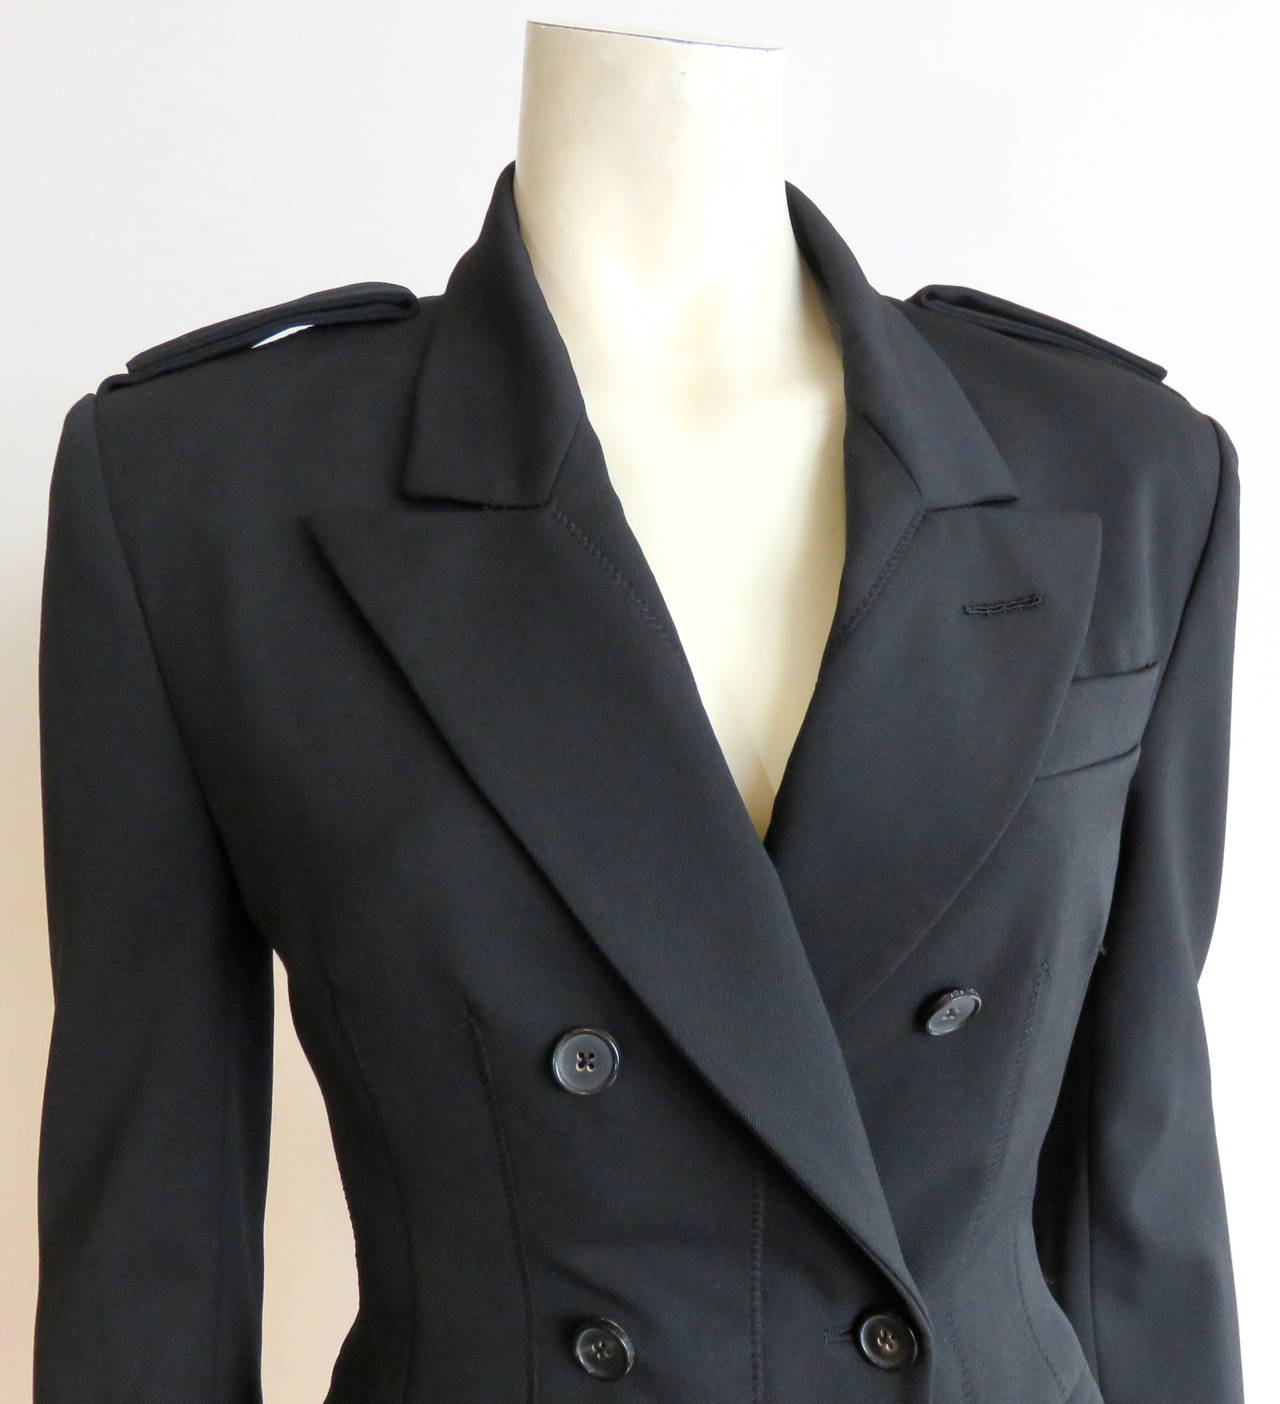 Recent TOM FORD Black lace-up blazer jacket - worn once 1